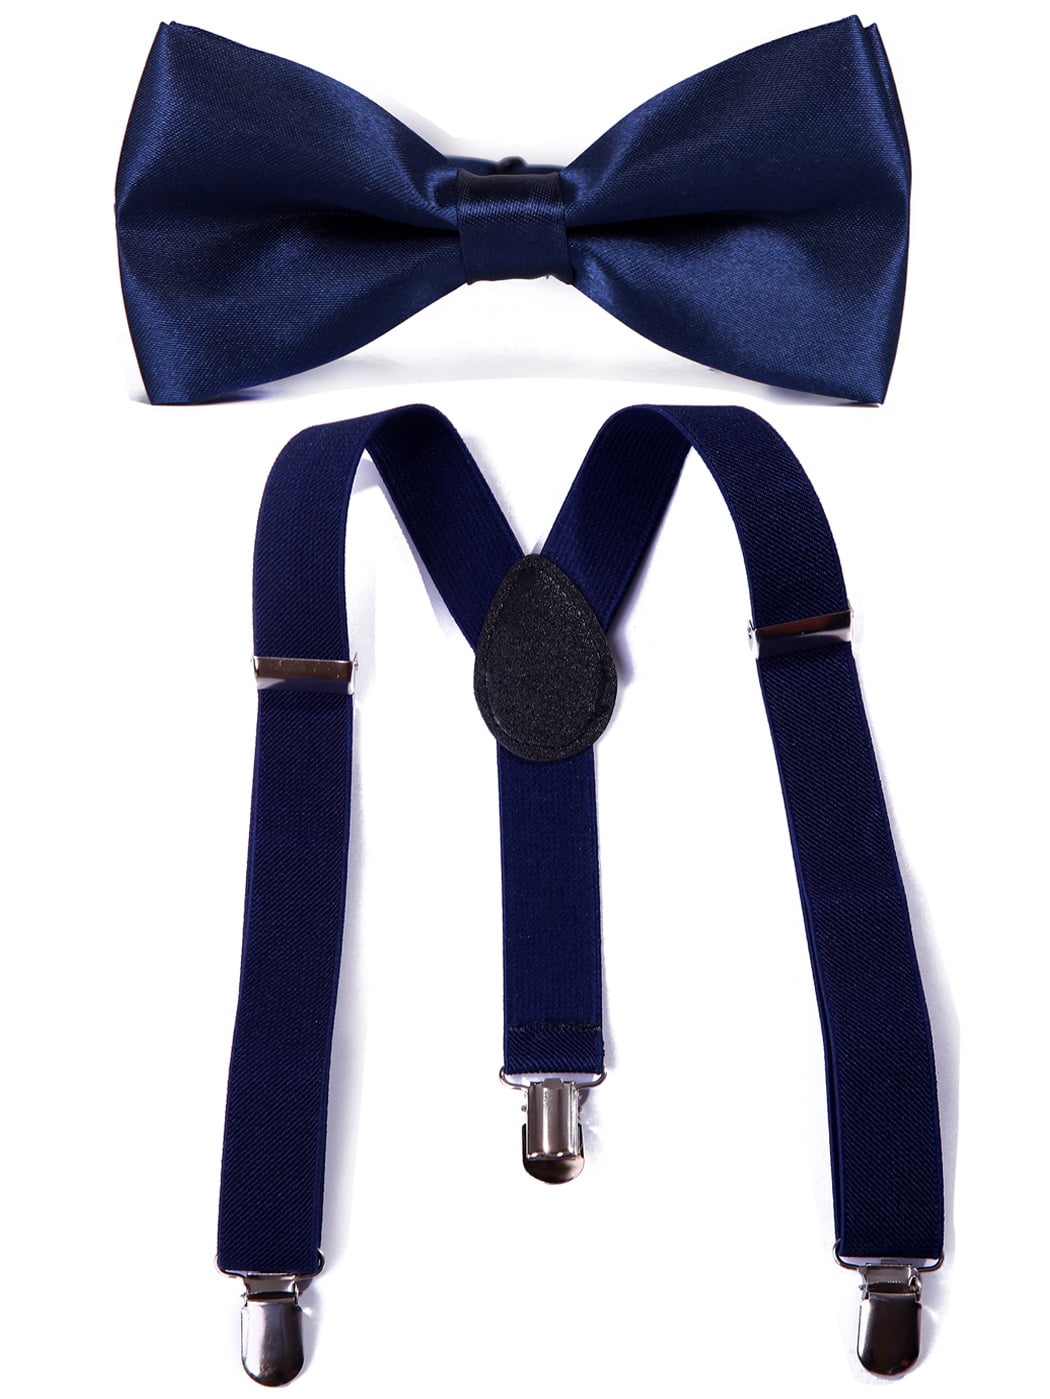 HDE - HDE Kids Suspender Bow Tie Set For Toddler Boy Child Suspenders